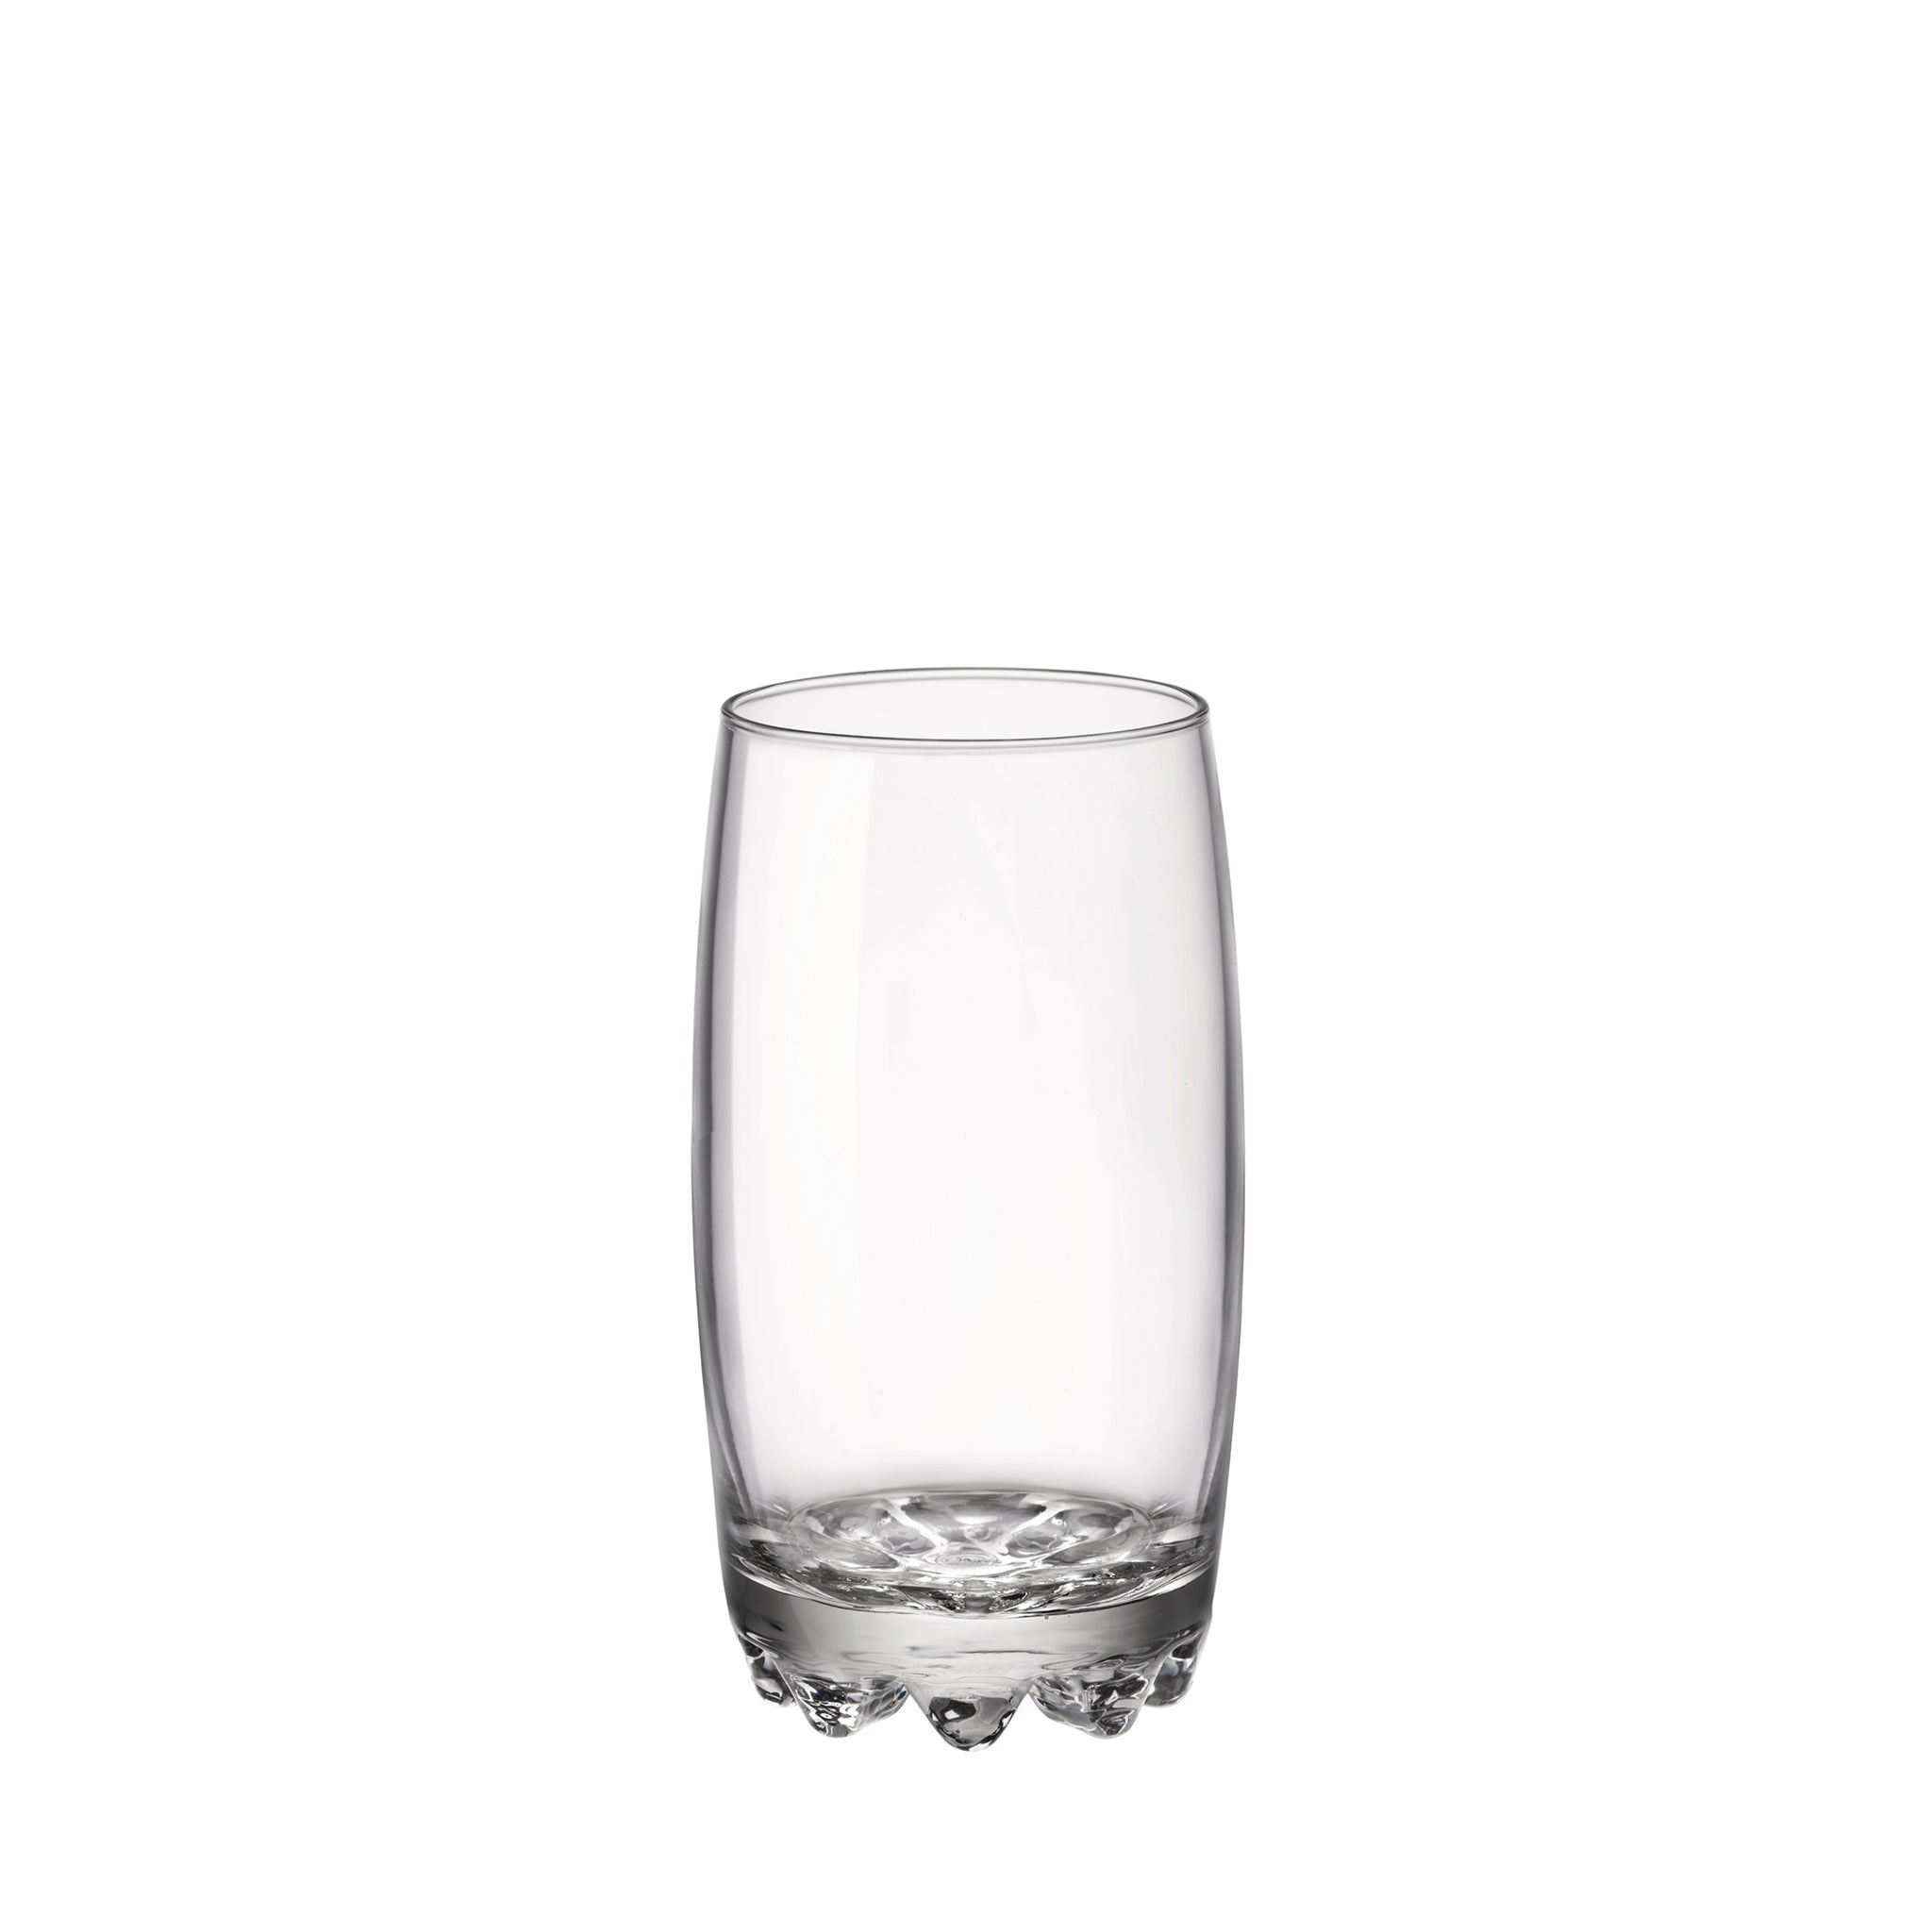 Galassia 13.75 oz. Beverage Drinking Glasses (Set of 6)